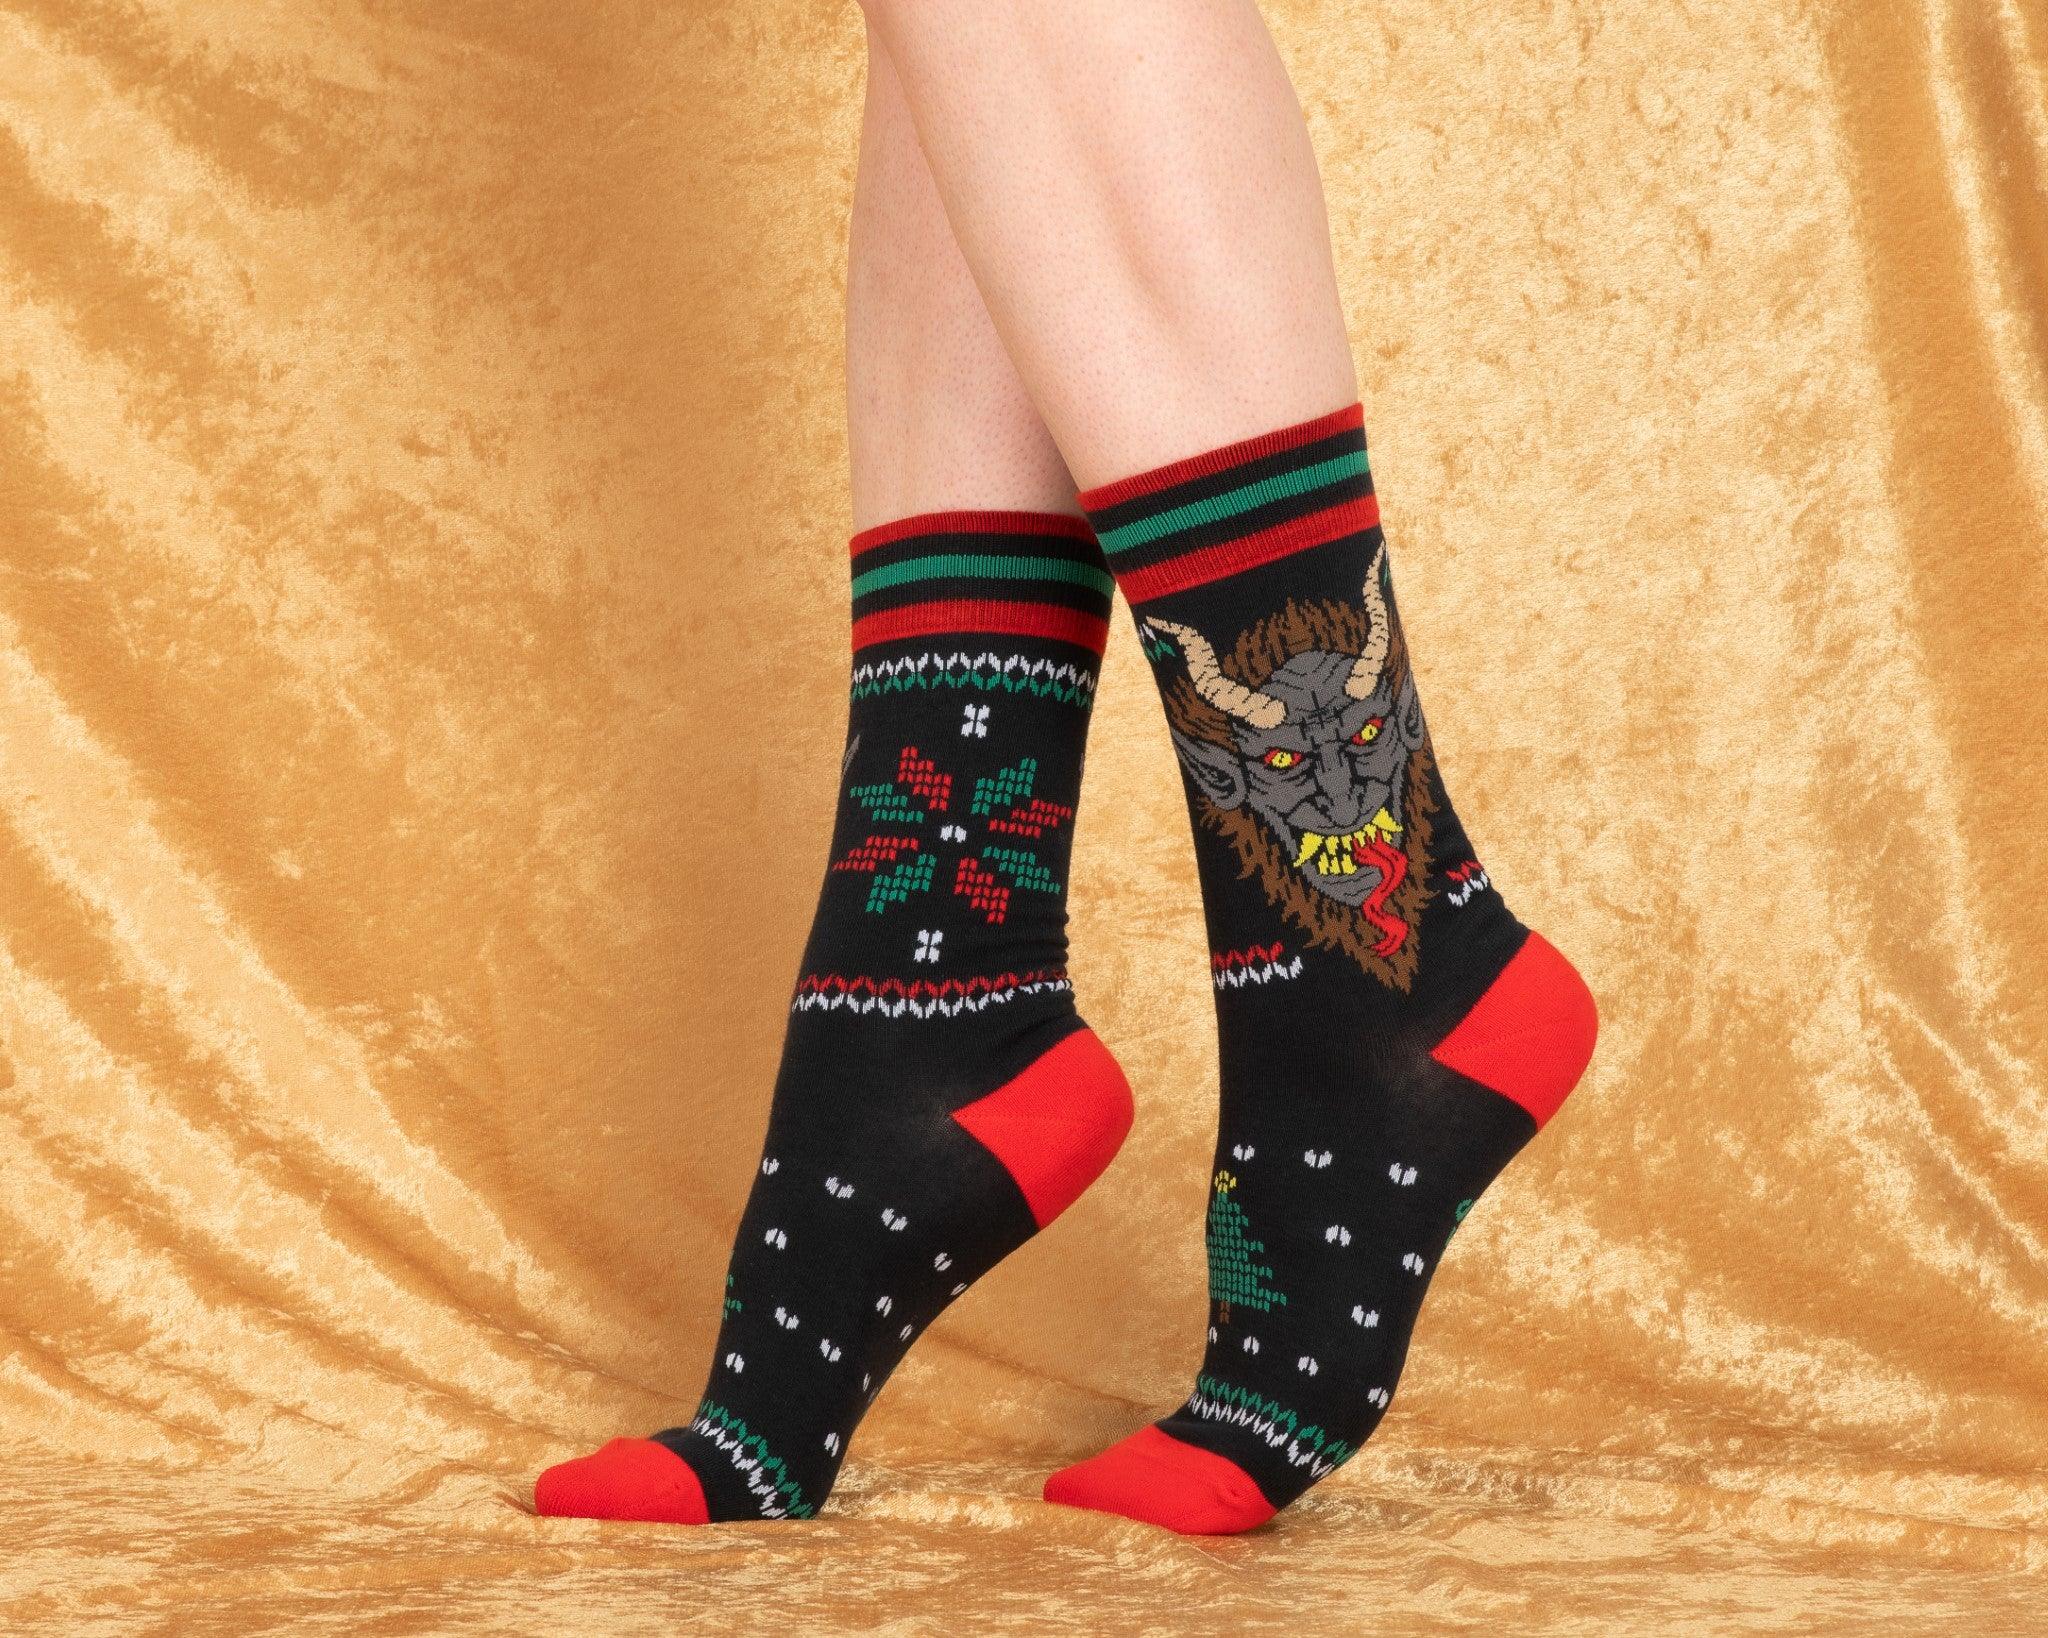 Krampus Sweater Crew Socks | FootClothes | Socks | 1201